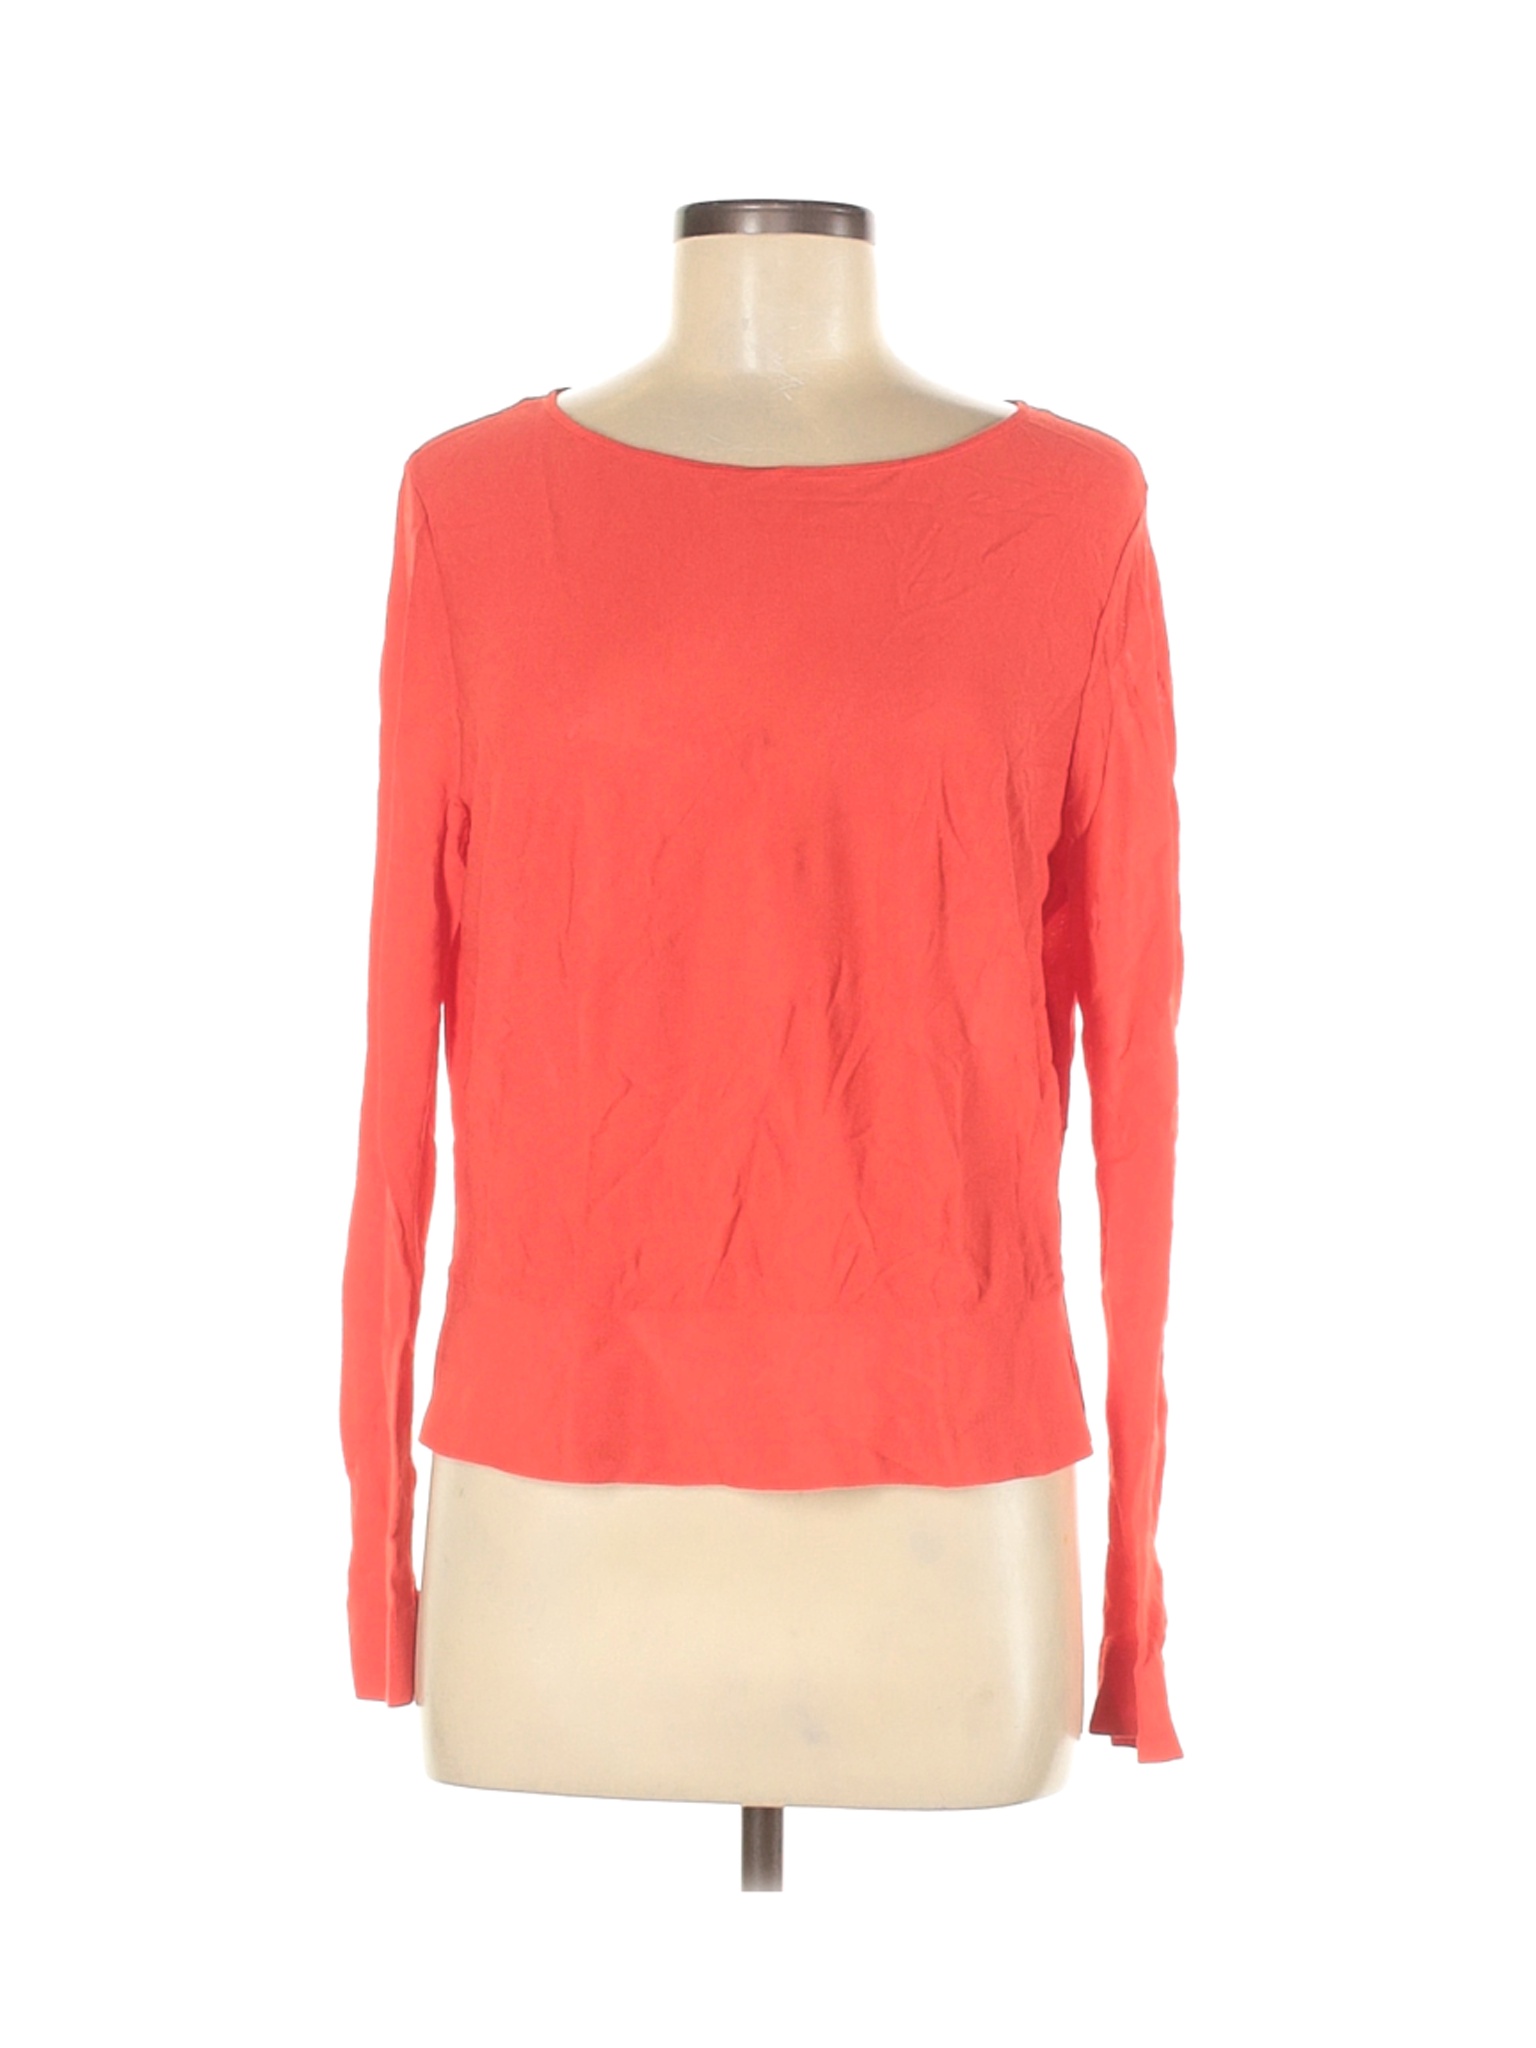 Cos Women Pink Long Sleeve Top M | eBay